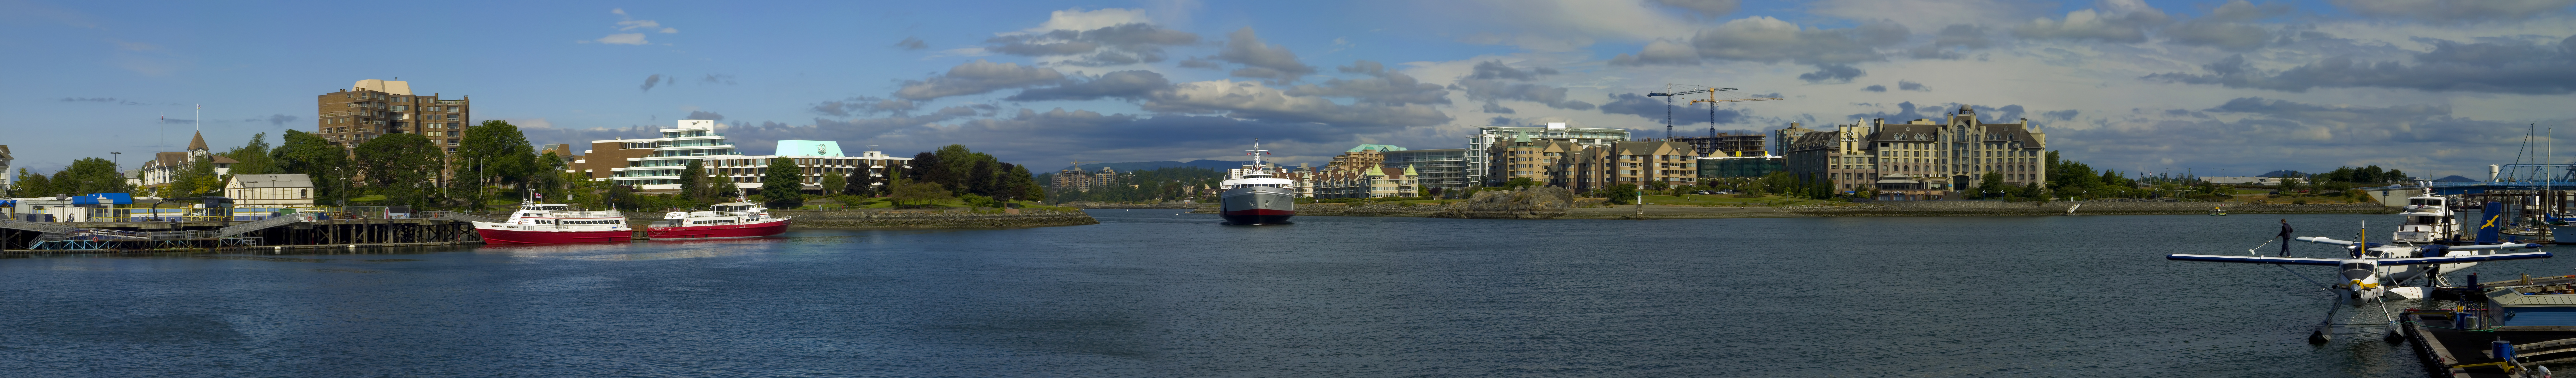 Image:MV Coho in Victoria's inner harbor.jpg: Victoria's inner harbor with the M/V Coho coming into port.